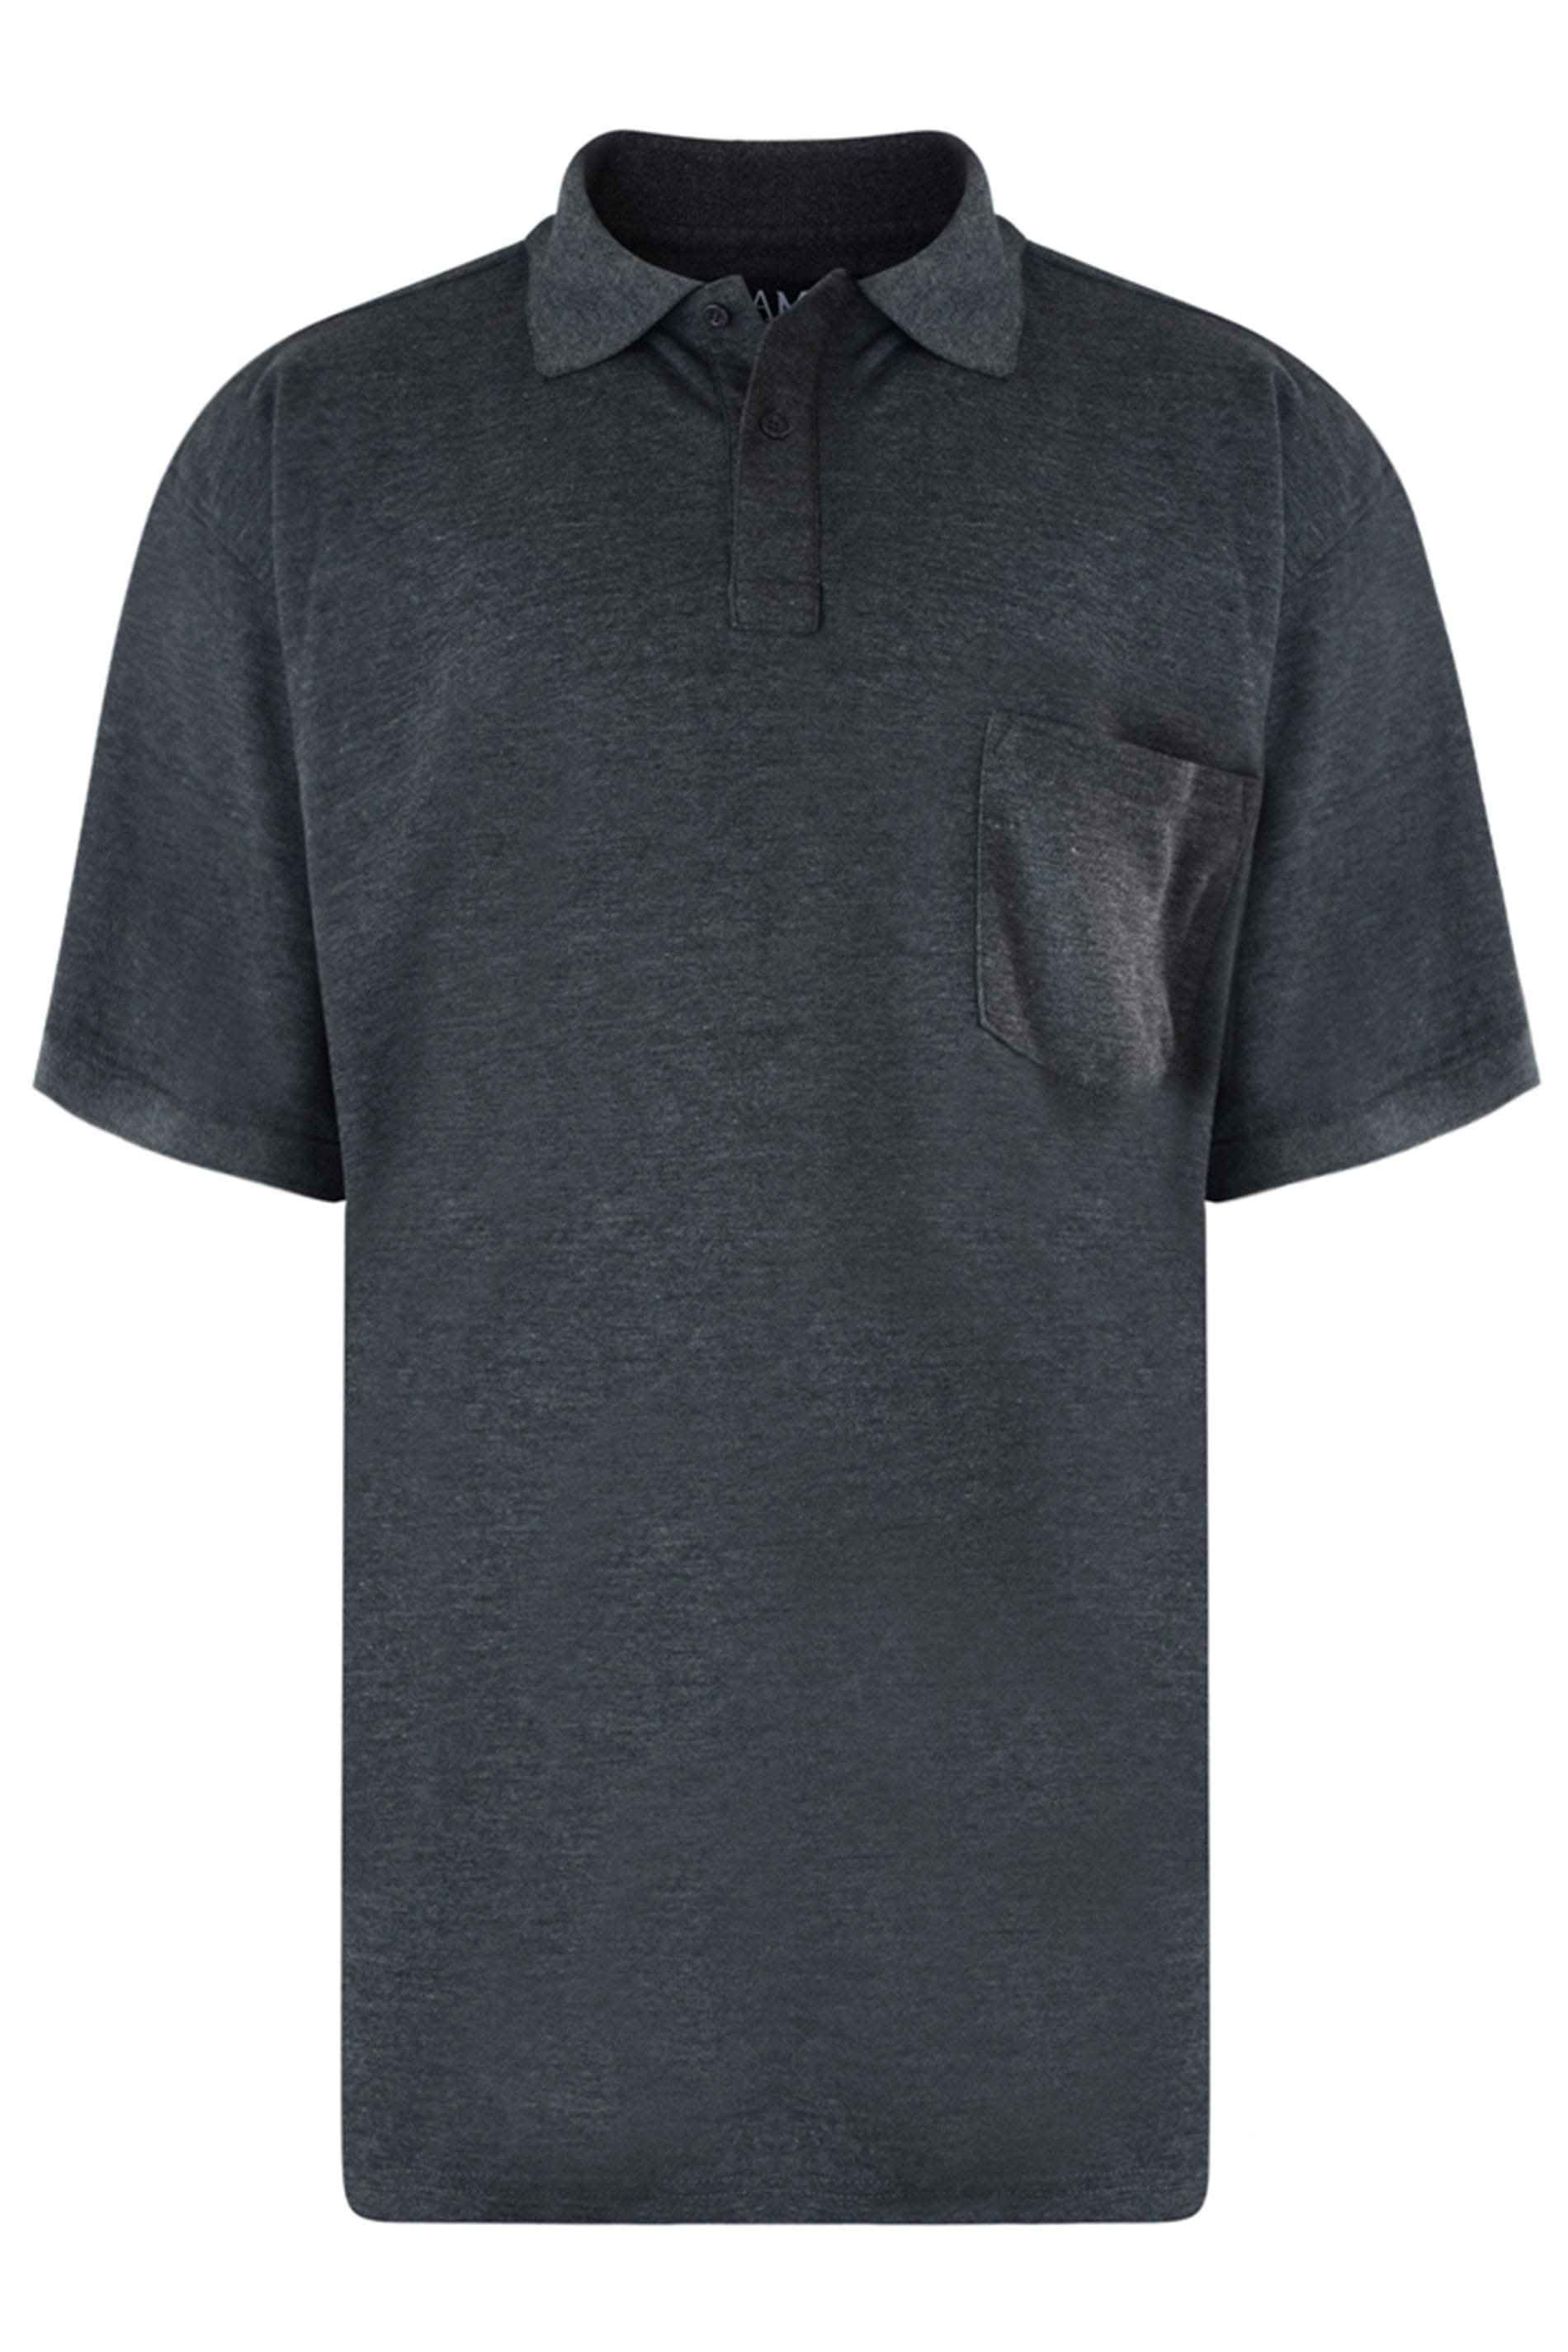 KAM Charcoal Grey Pocket Polo Shirt | BadRhino 2